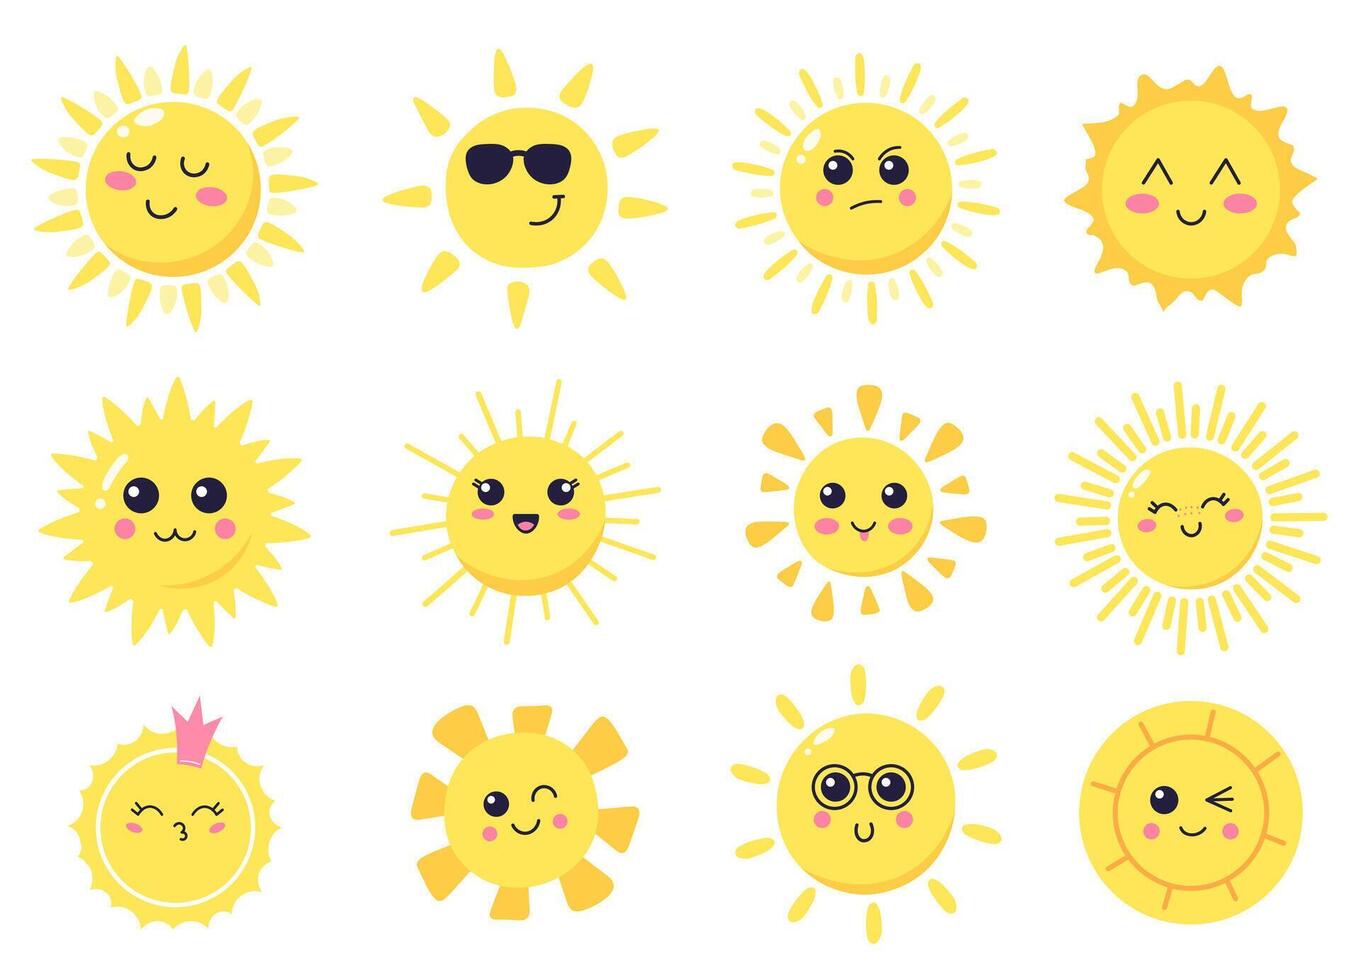 gelukkig tekenfilm zon. hand- getrokken schattig glimlachen zonnen, zonnig gelukkig karakters, schijnend helder zon vector illustratie symbolen reeks